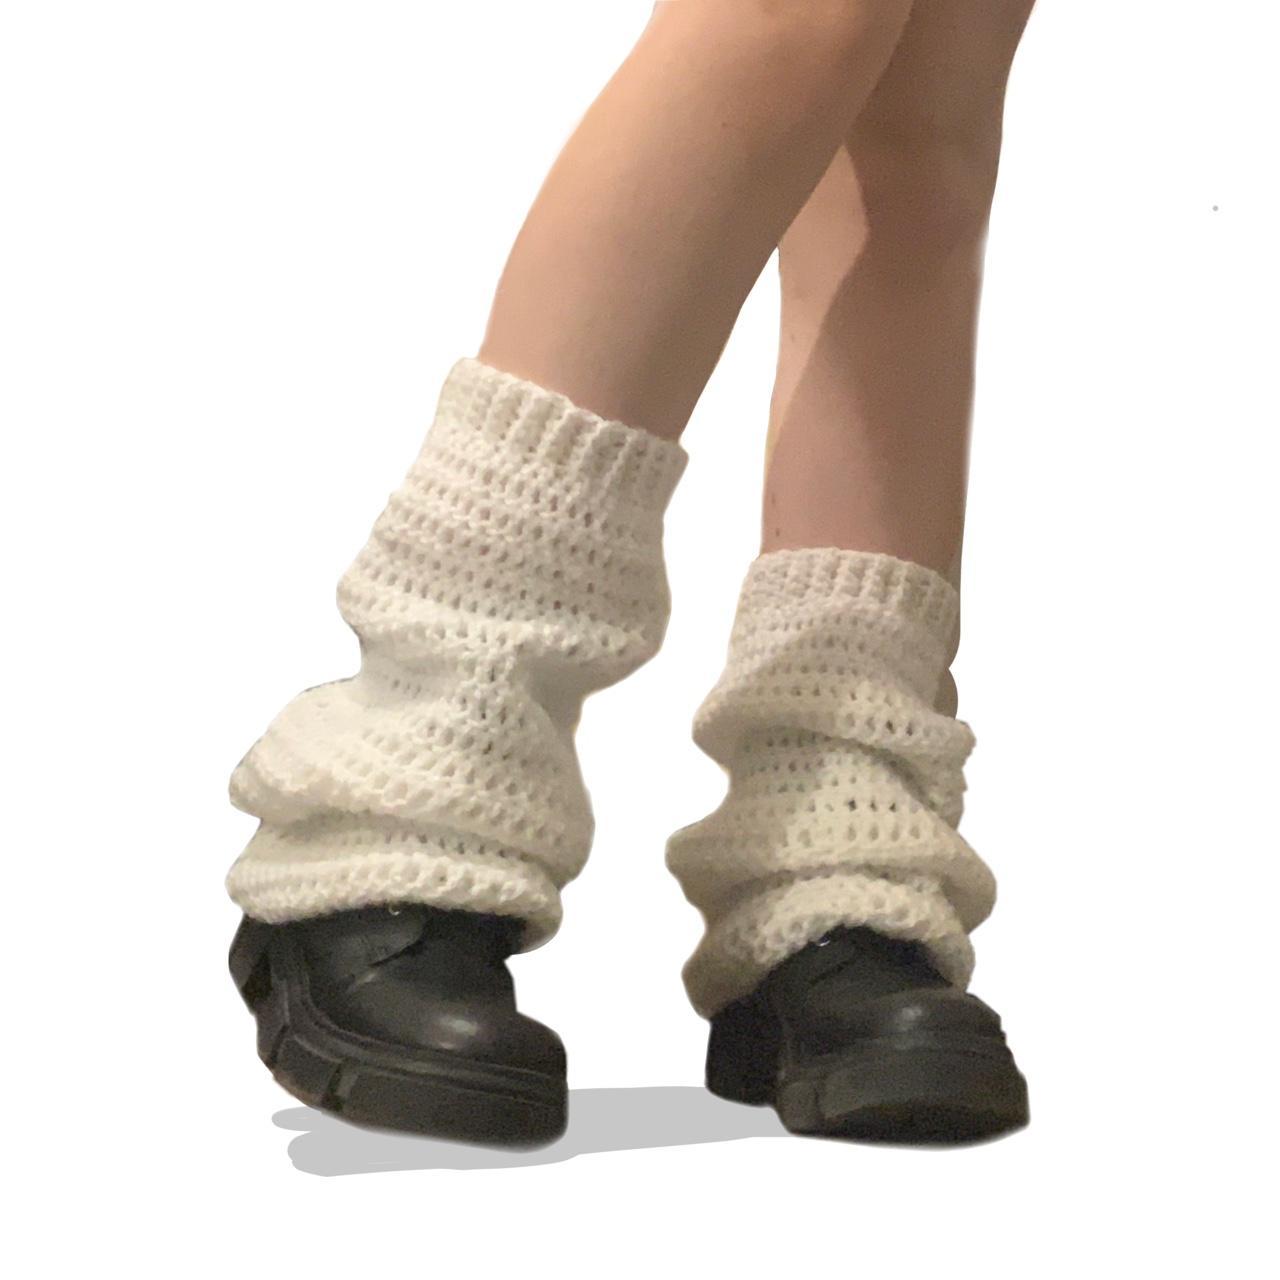 White handmade crochet leg warmers 16.5” long 8.5”... - Depop